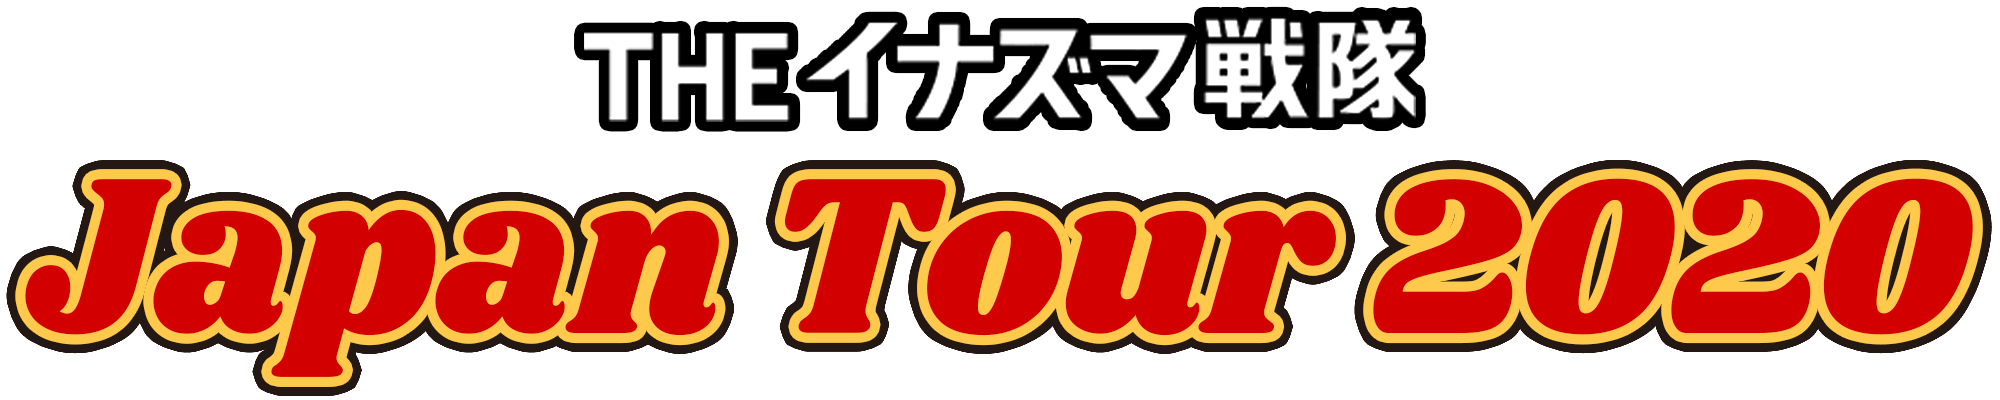 THE イナズマ戦隊 Japan Tour 2020